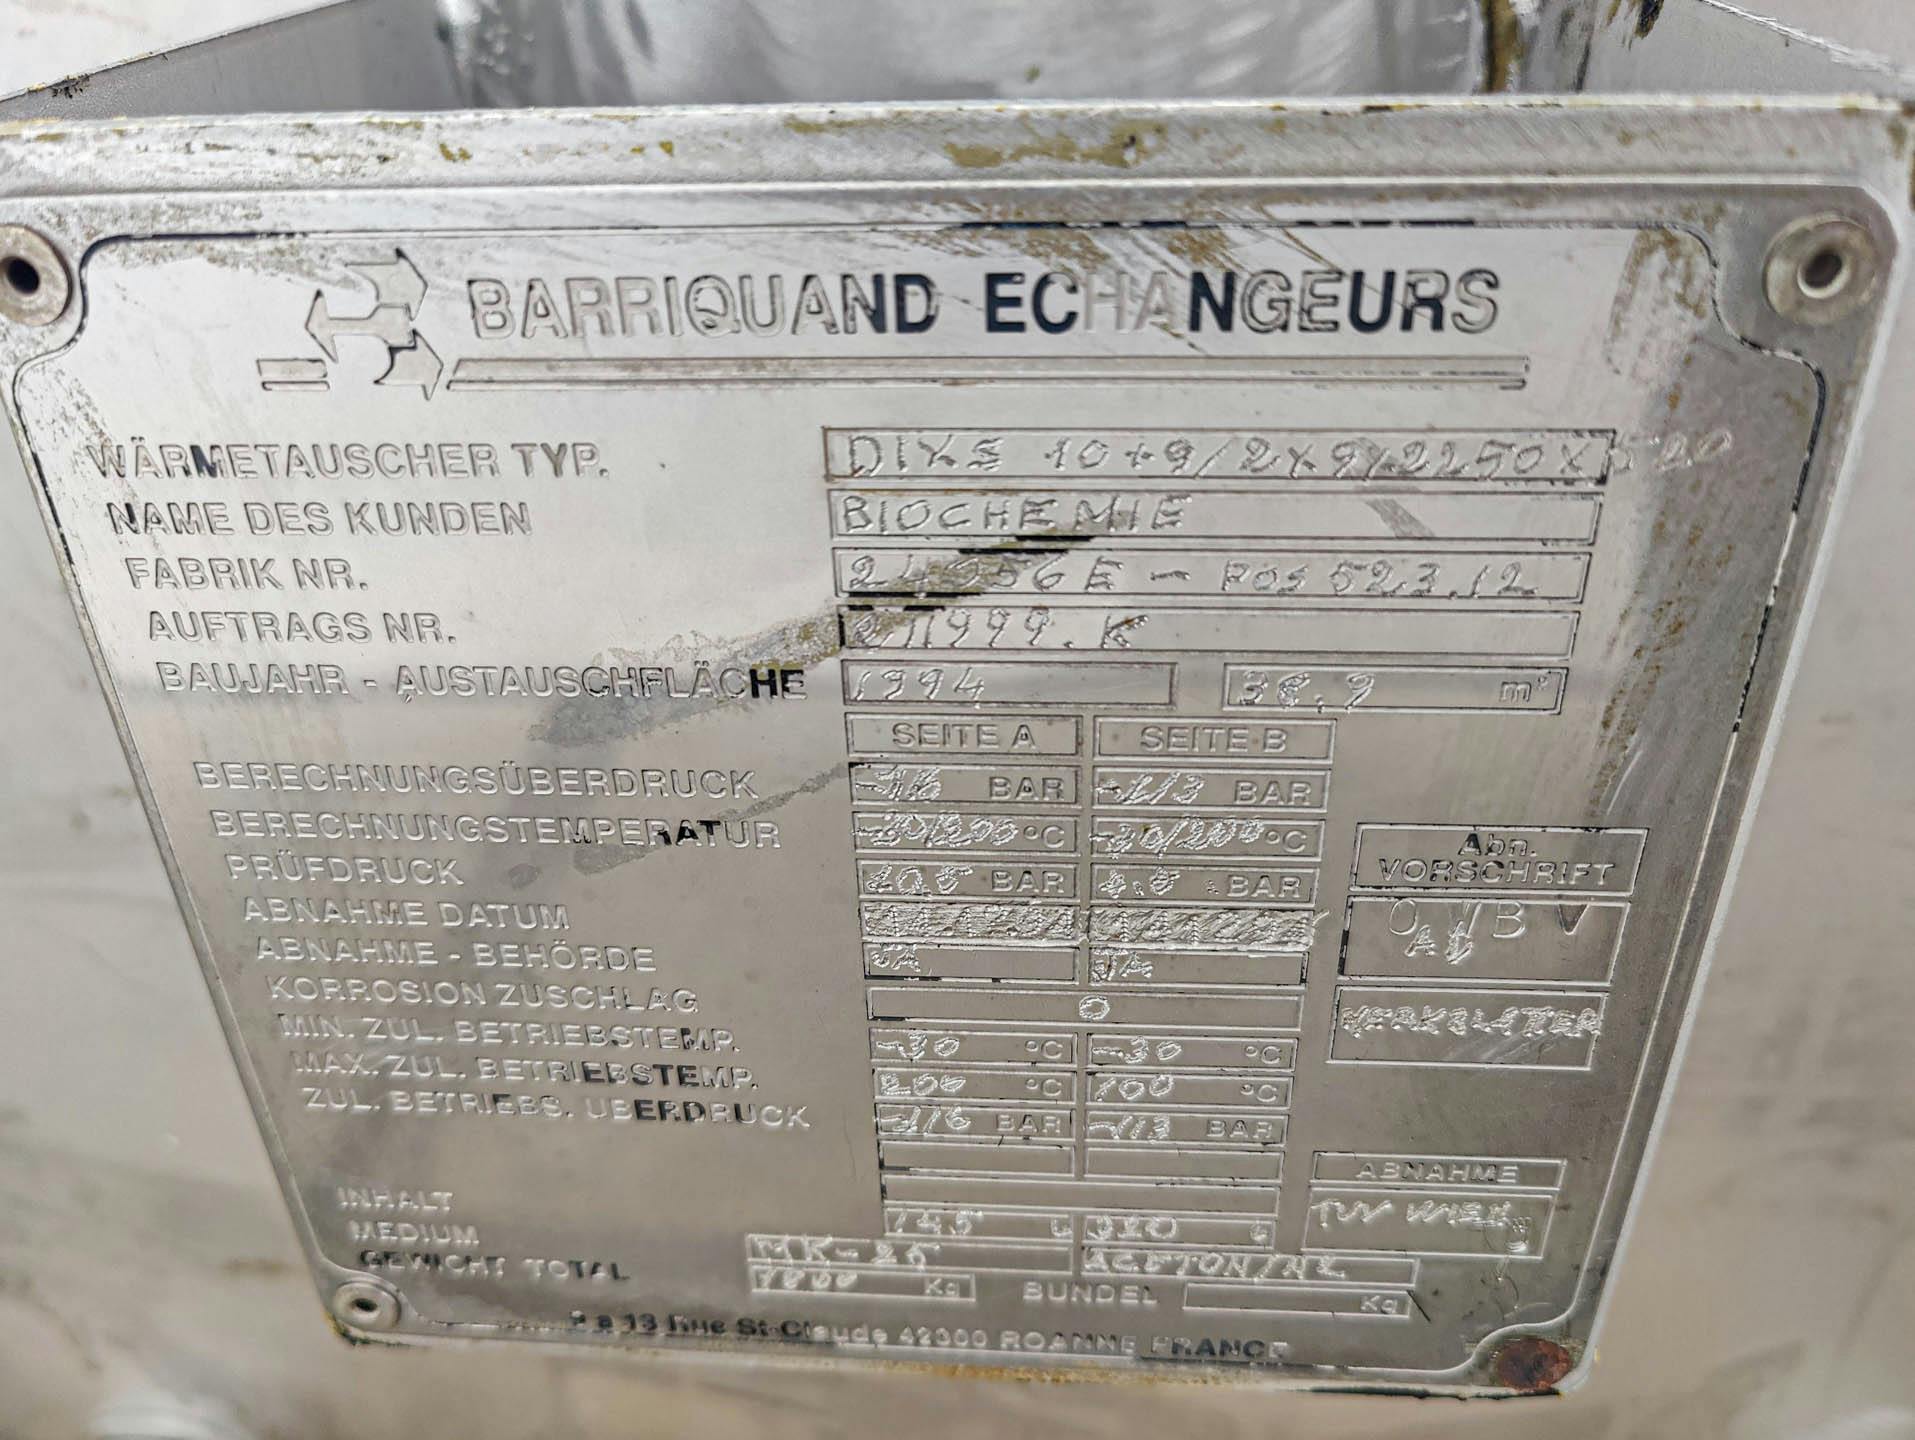 Barriquand Platular DIXS condensor - Intercambiador de calor de placas - image 8